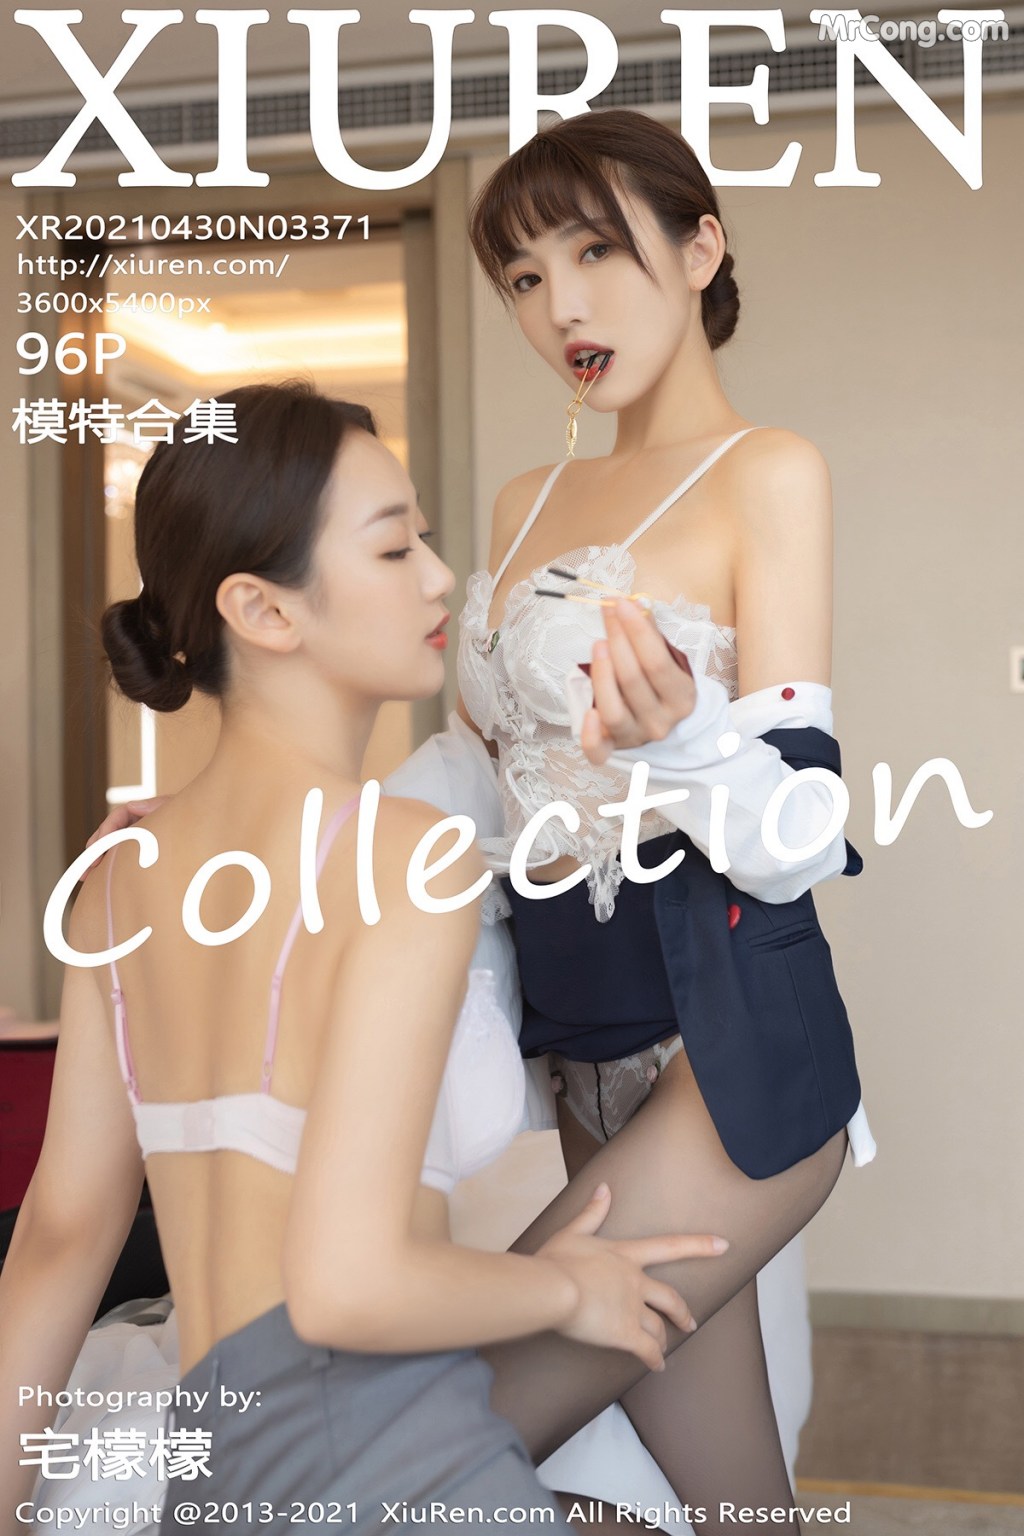 Asian erotic models lesbian